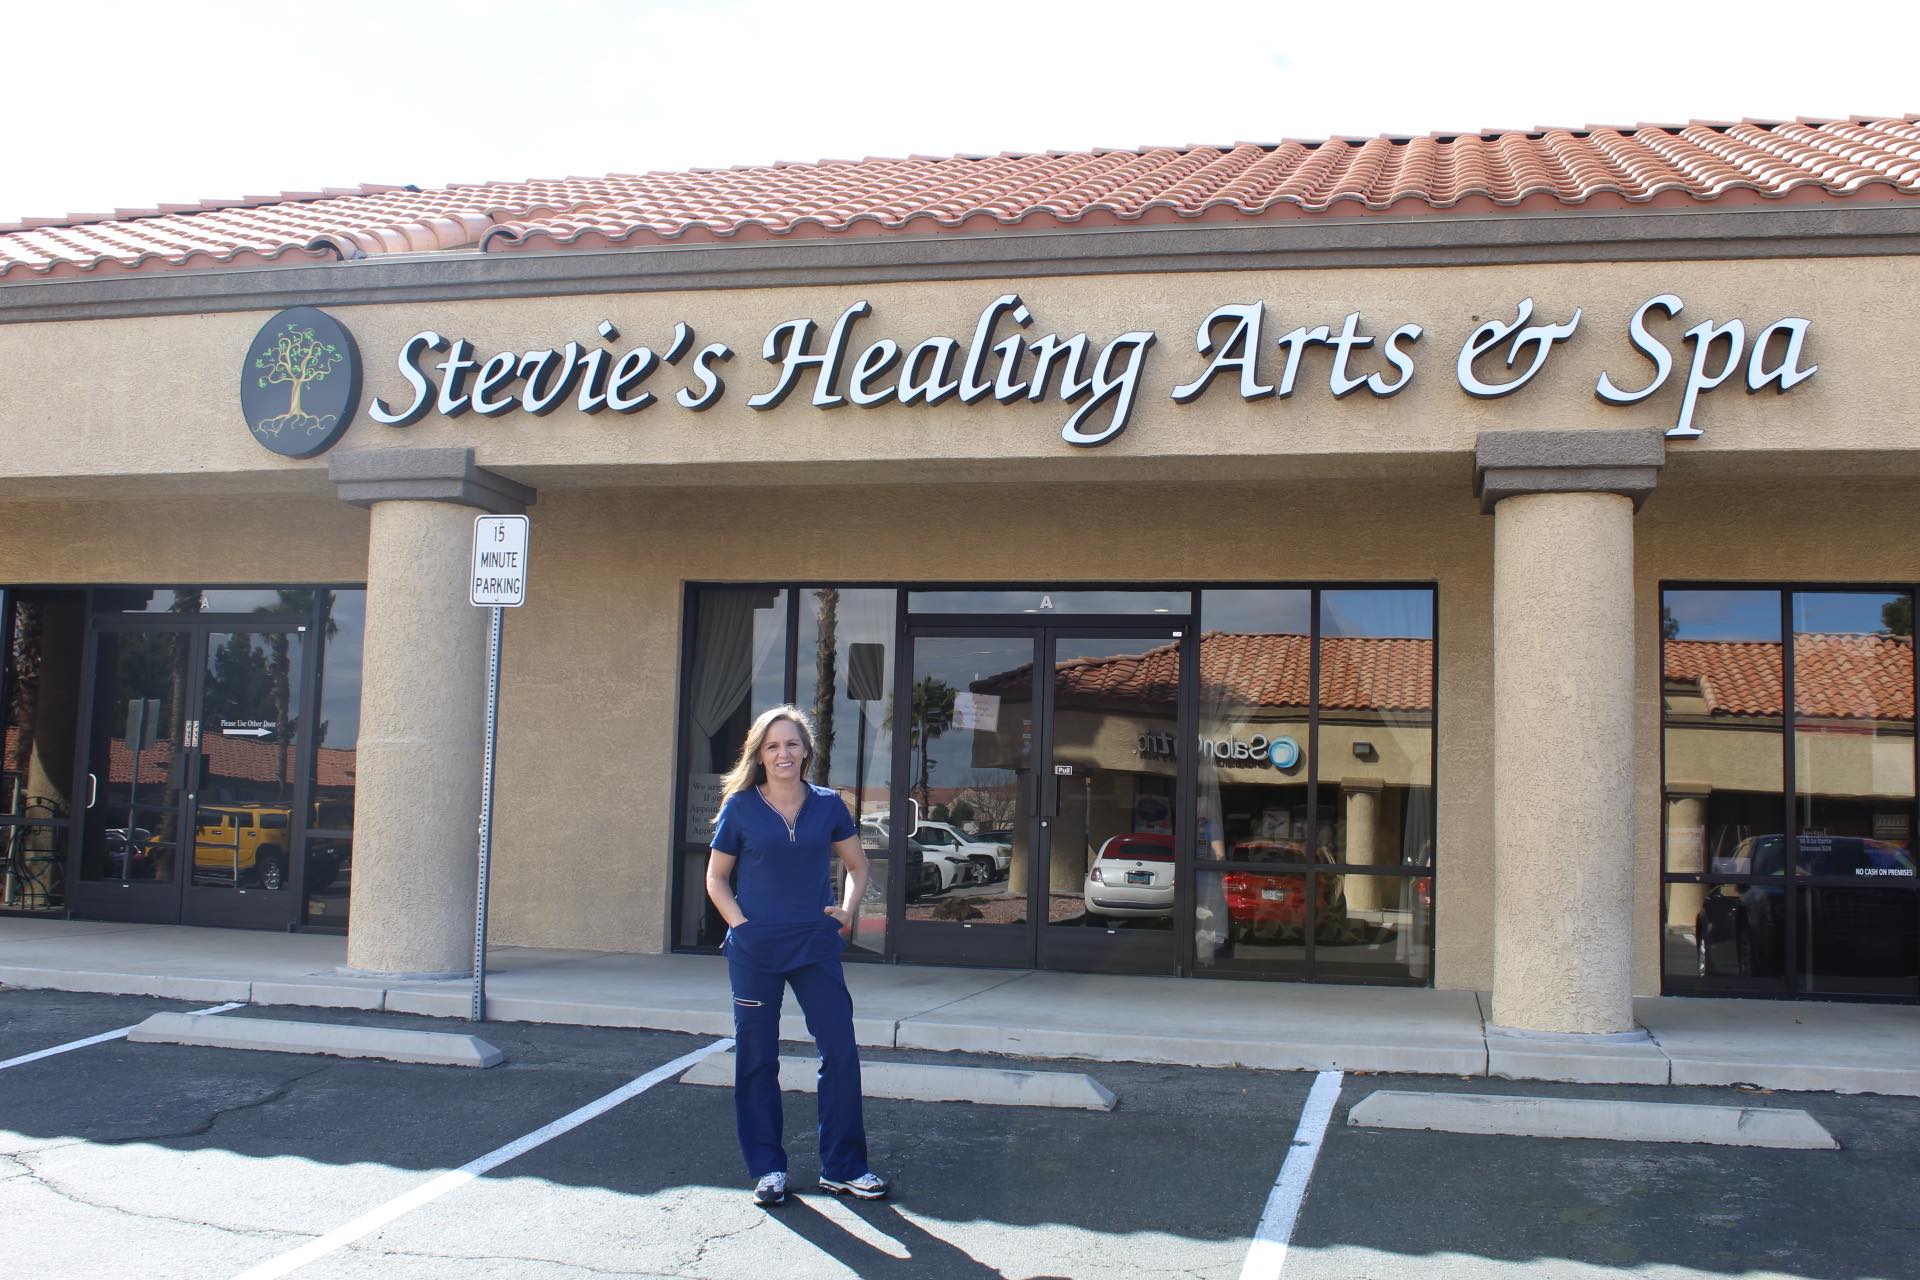 Stevie's Healing Arts & Spa